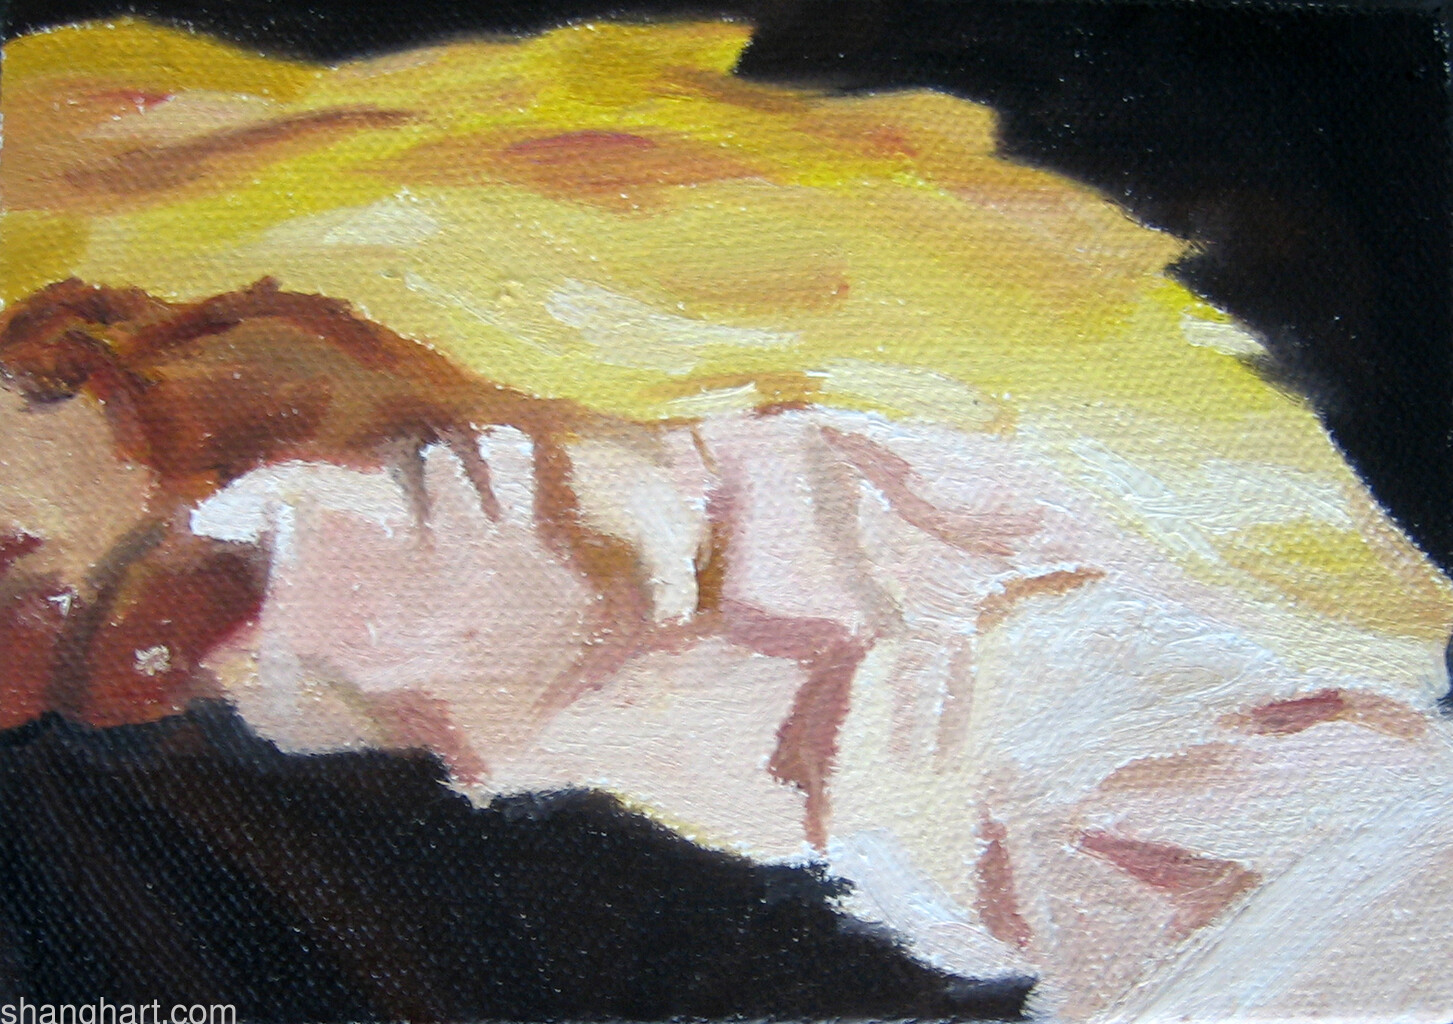 2009, 14x20cm, oil on canvas